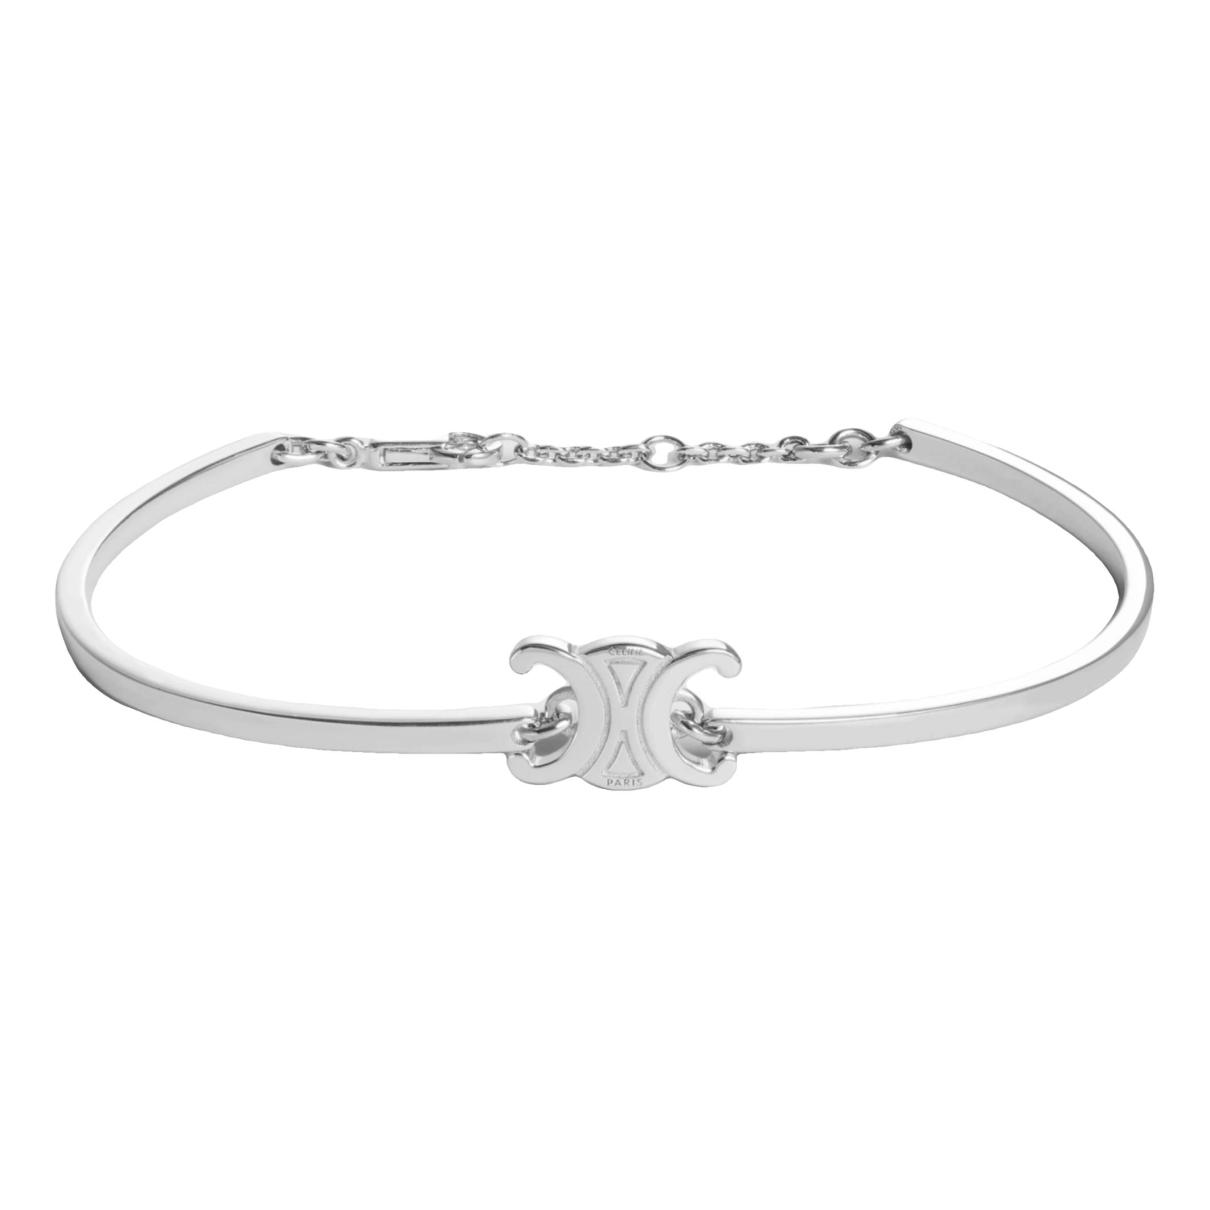 Bracelet Celine Silver in Other - 35439390